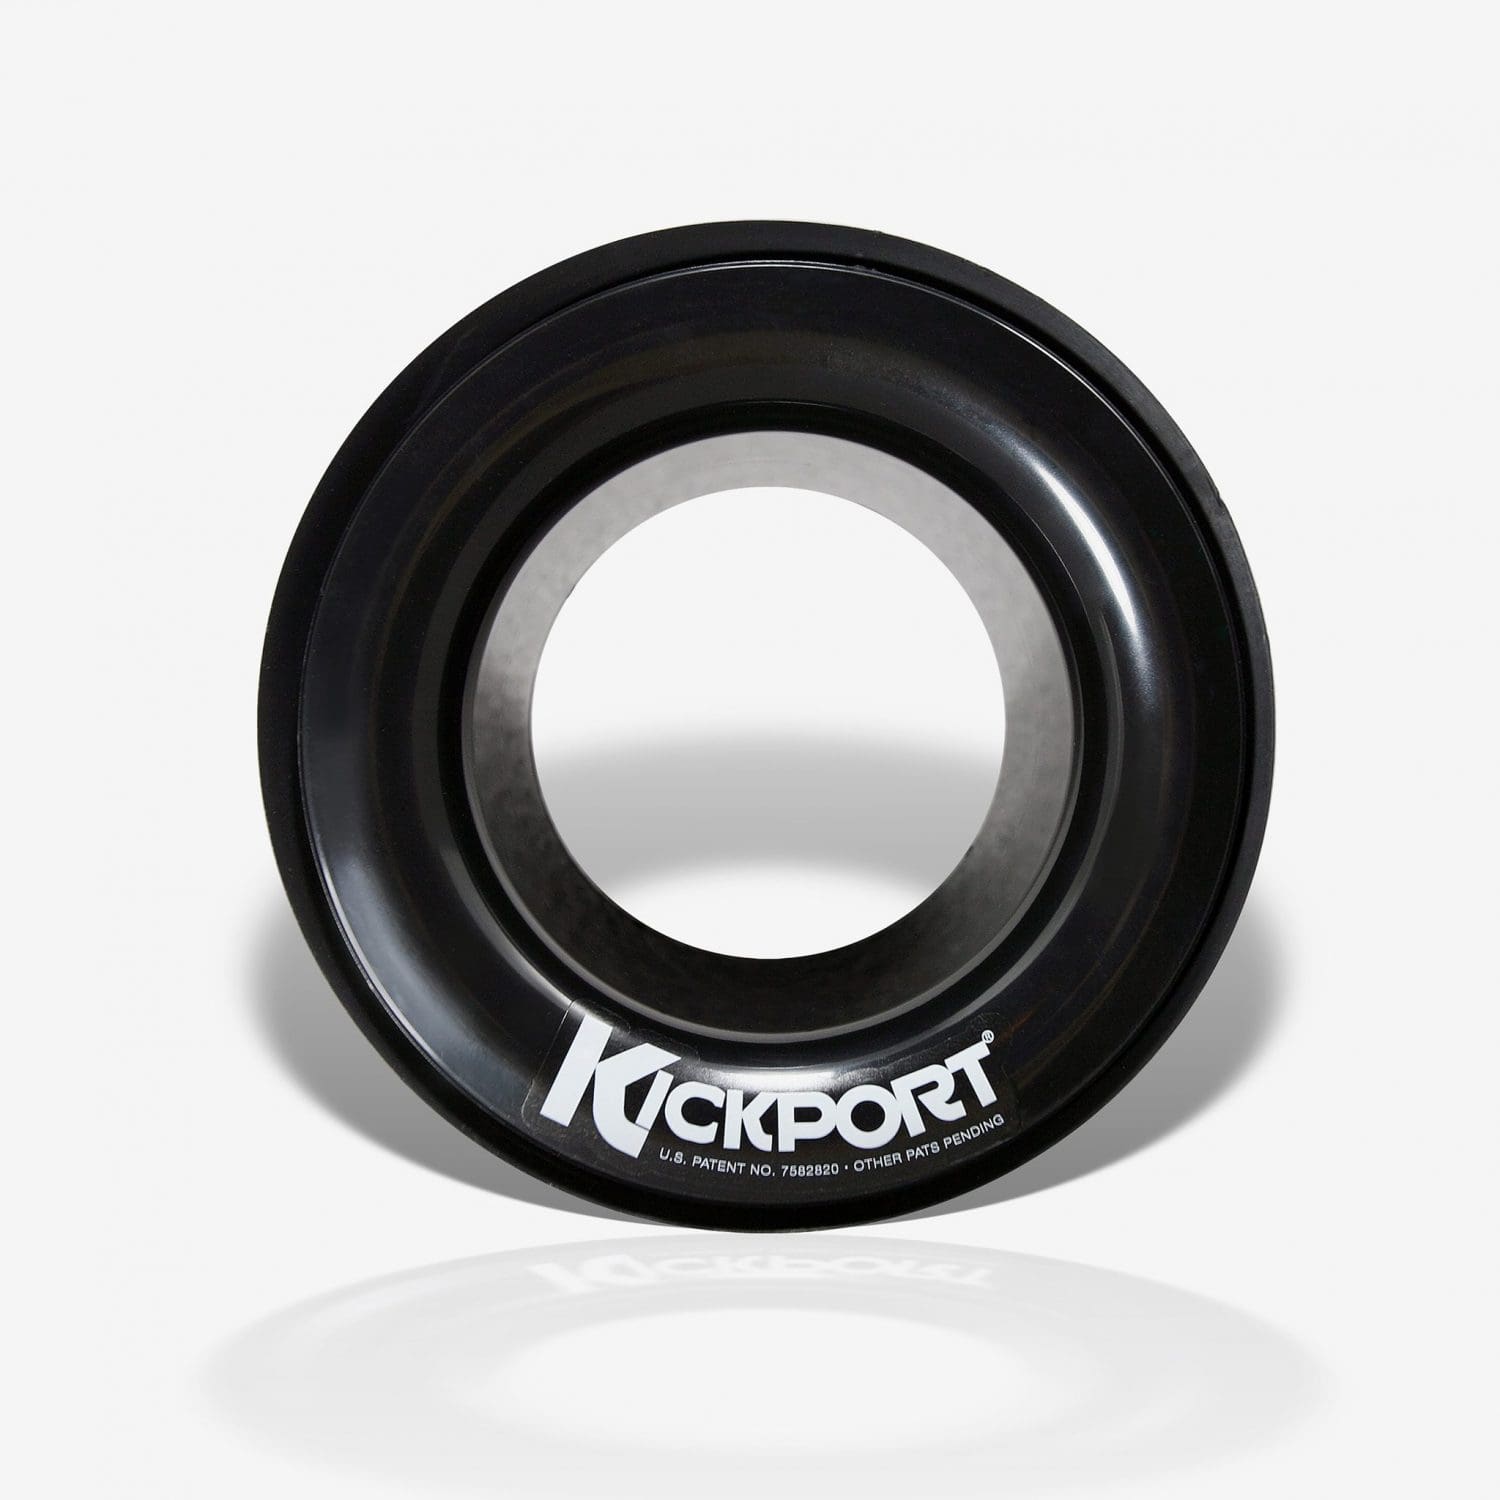 Kickport Acoustic Drum Enhancer